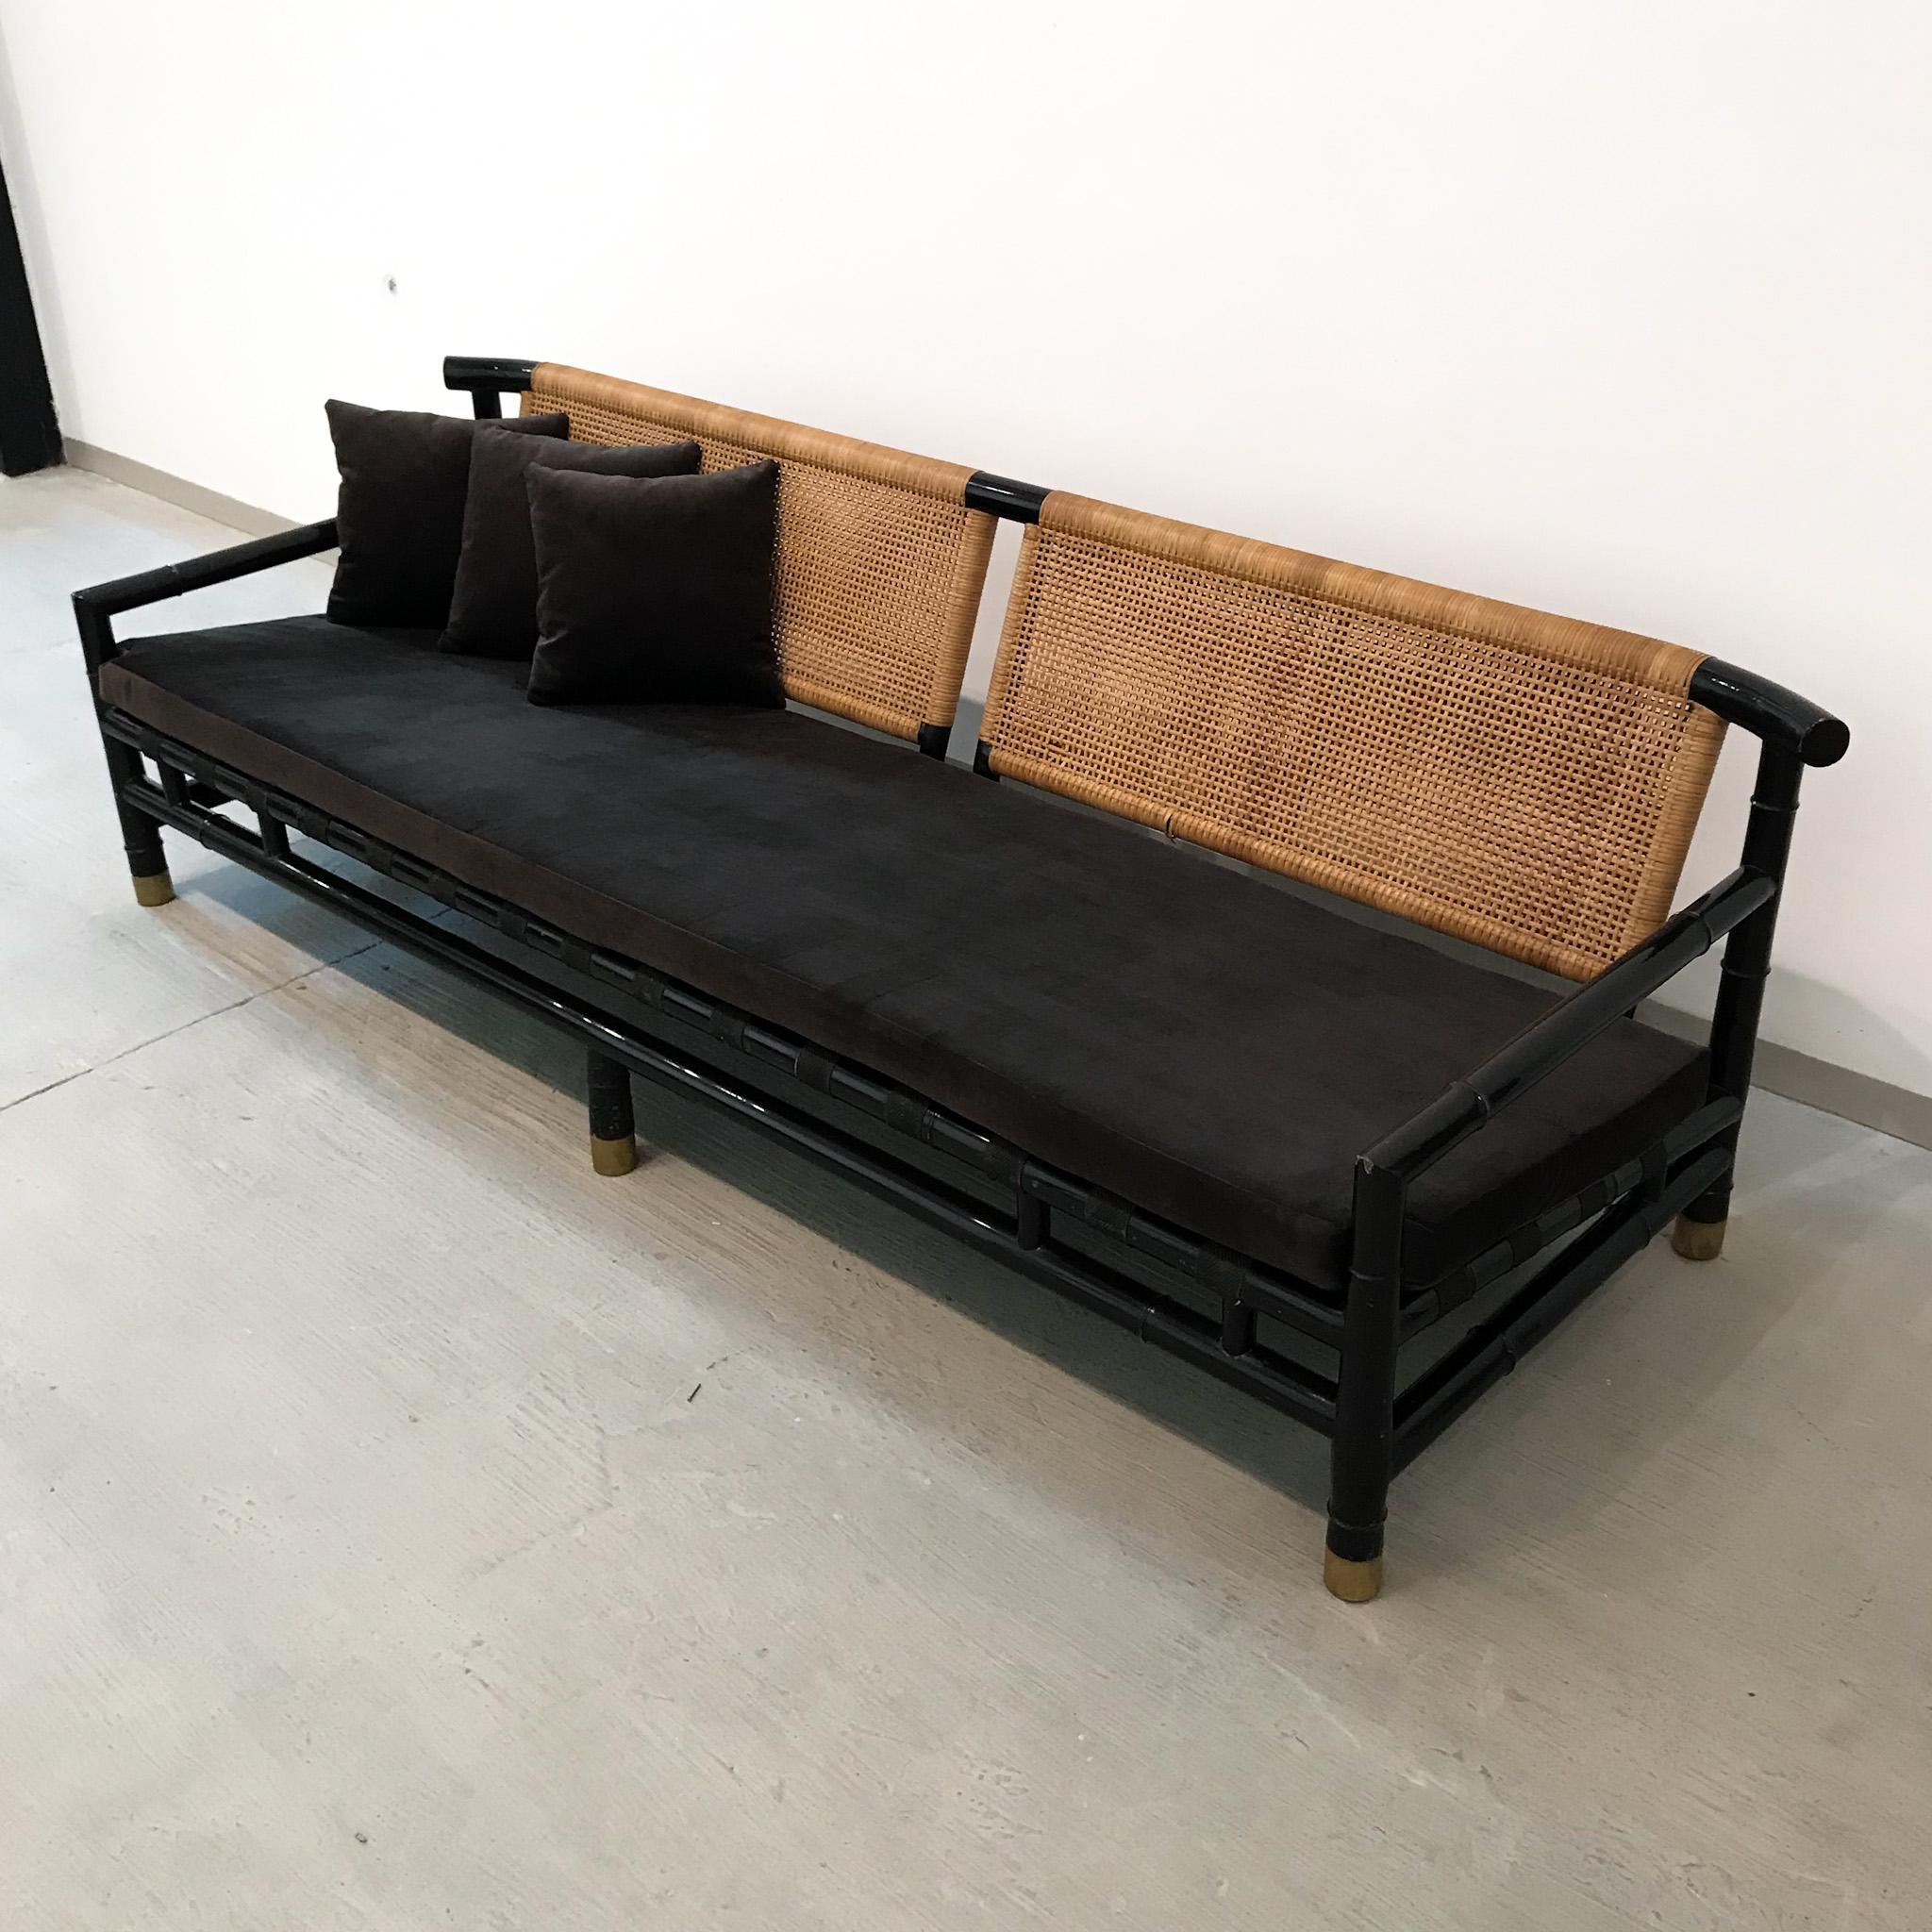 Long sofa by frank Kyle.